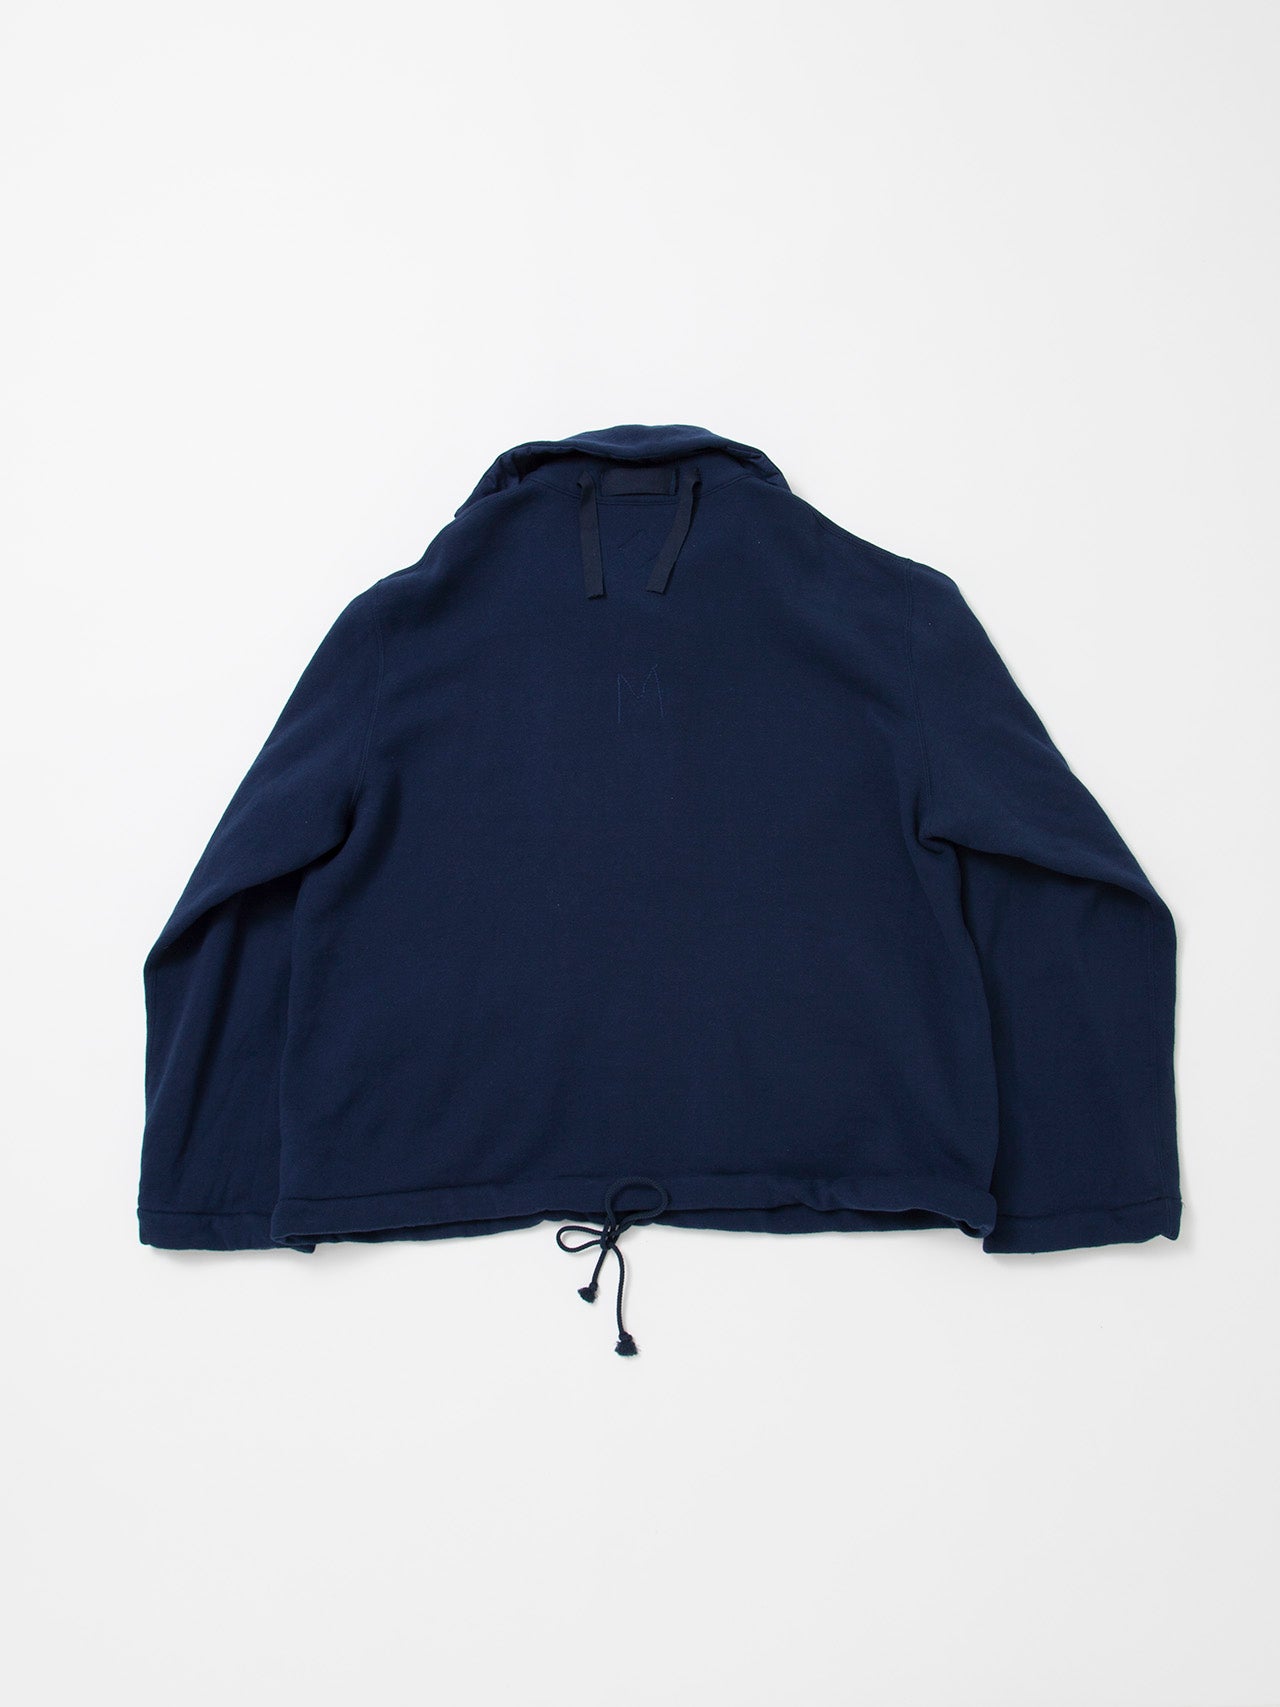 CJ003 - CORONA・Utility Navy Pullover Jacket / Cotton Fleece - Navy